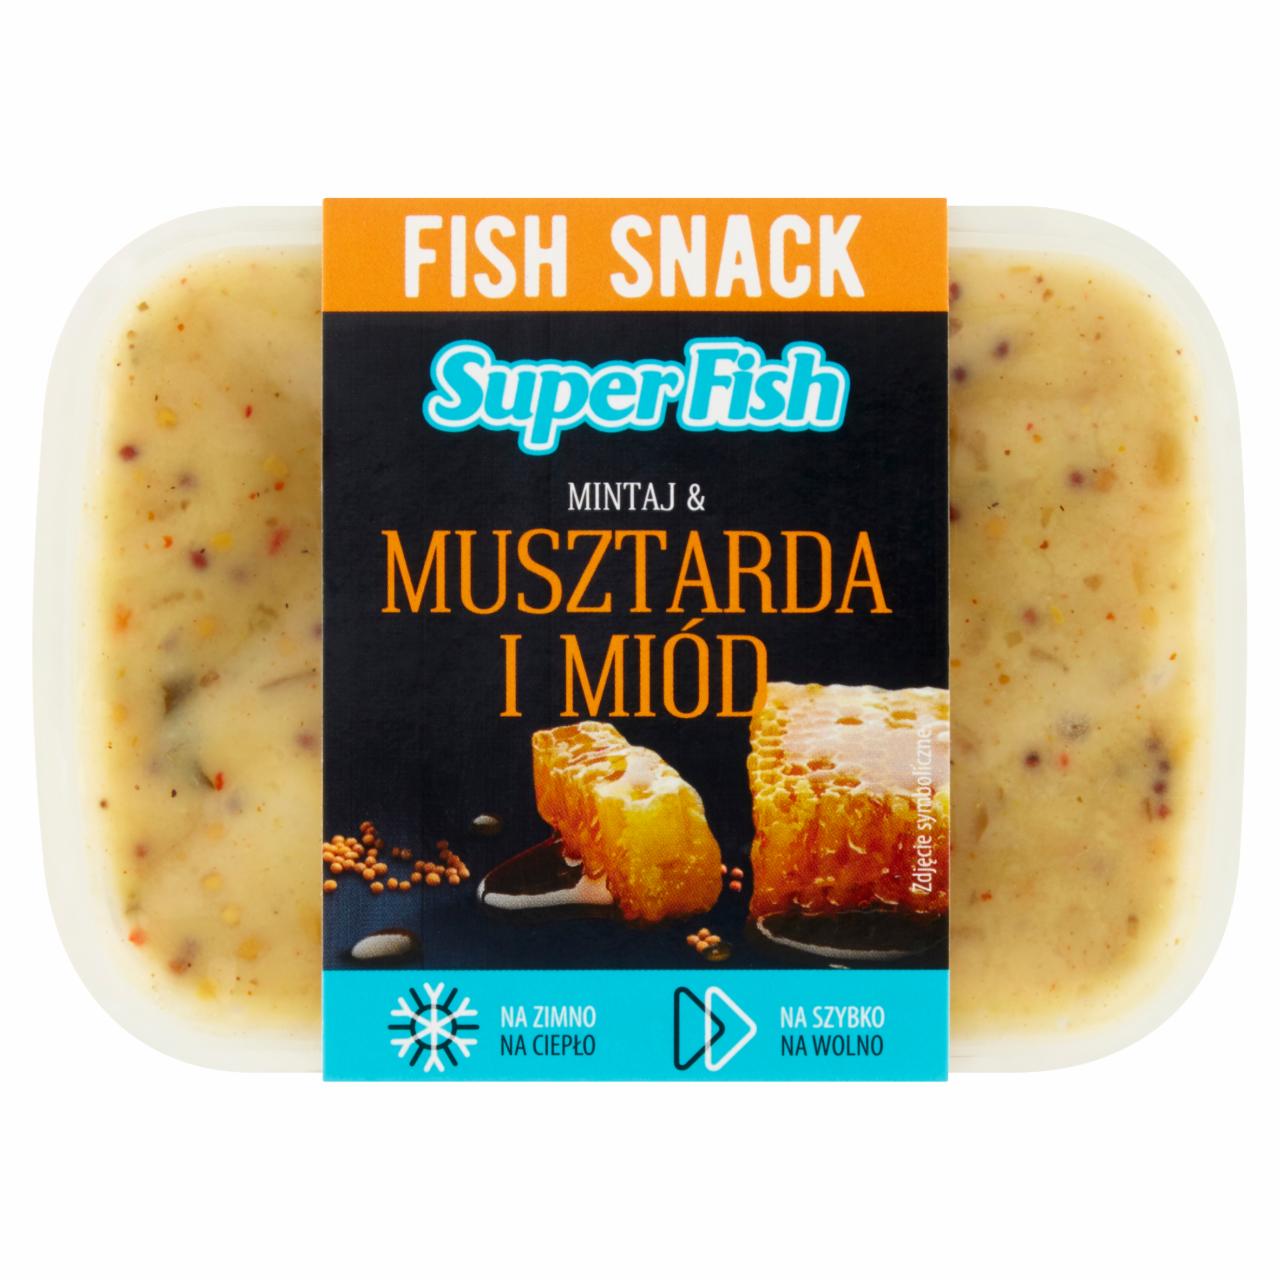 Zdjęcia - SuperFish Fish Snack Mintaj & musztarda i miód 150 g